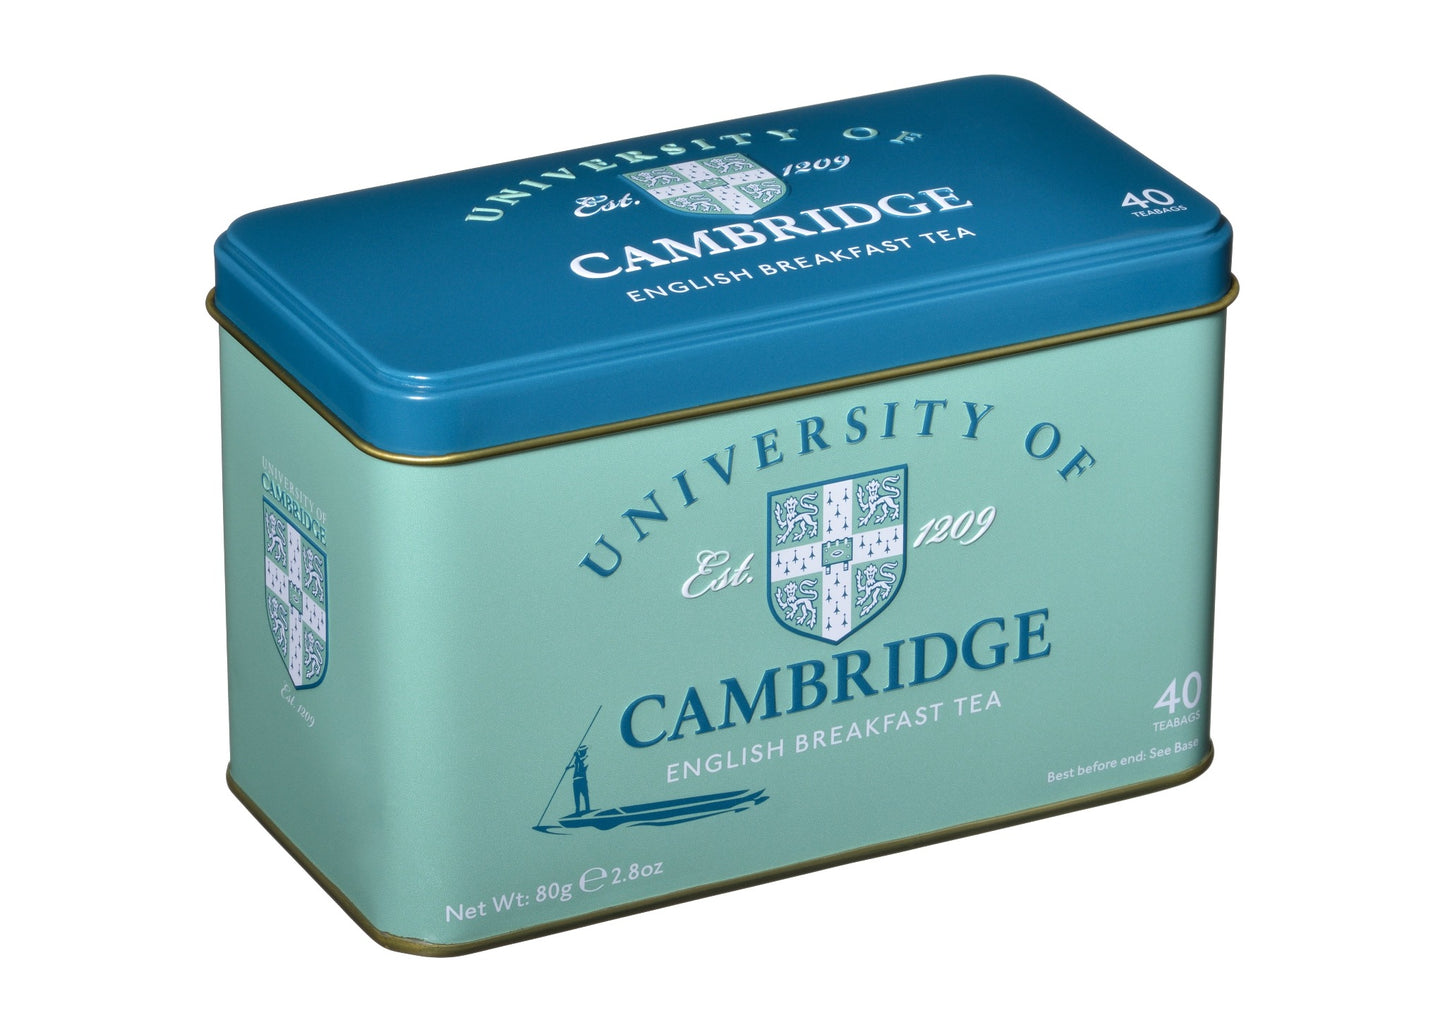 SALE Cambridge University English Breakfast Tea (damaged)